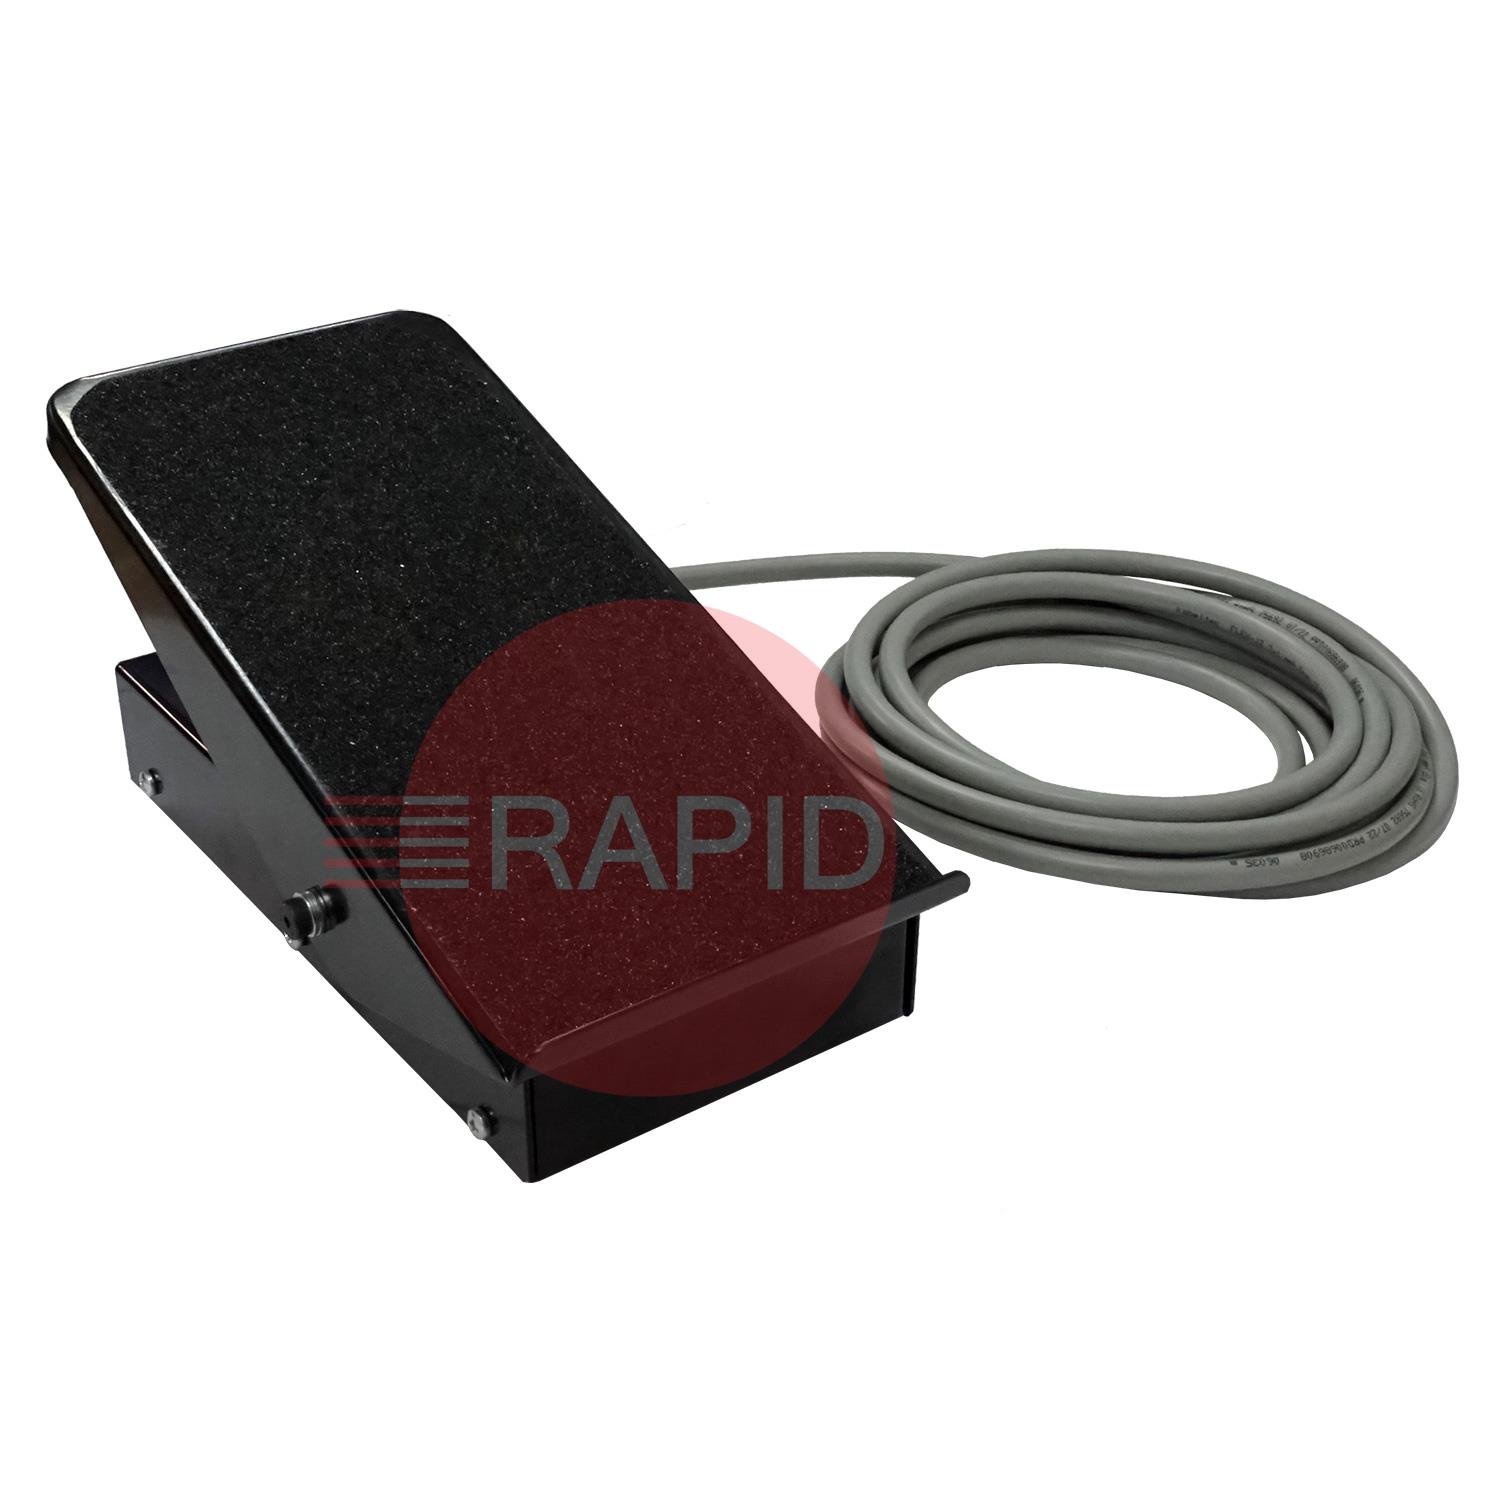 FSMT1501  Migatronic Hfp201 Etc. (Ews Made) Footpedal C/W 5 Pin Small Plug